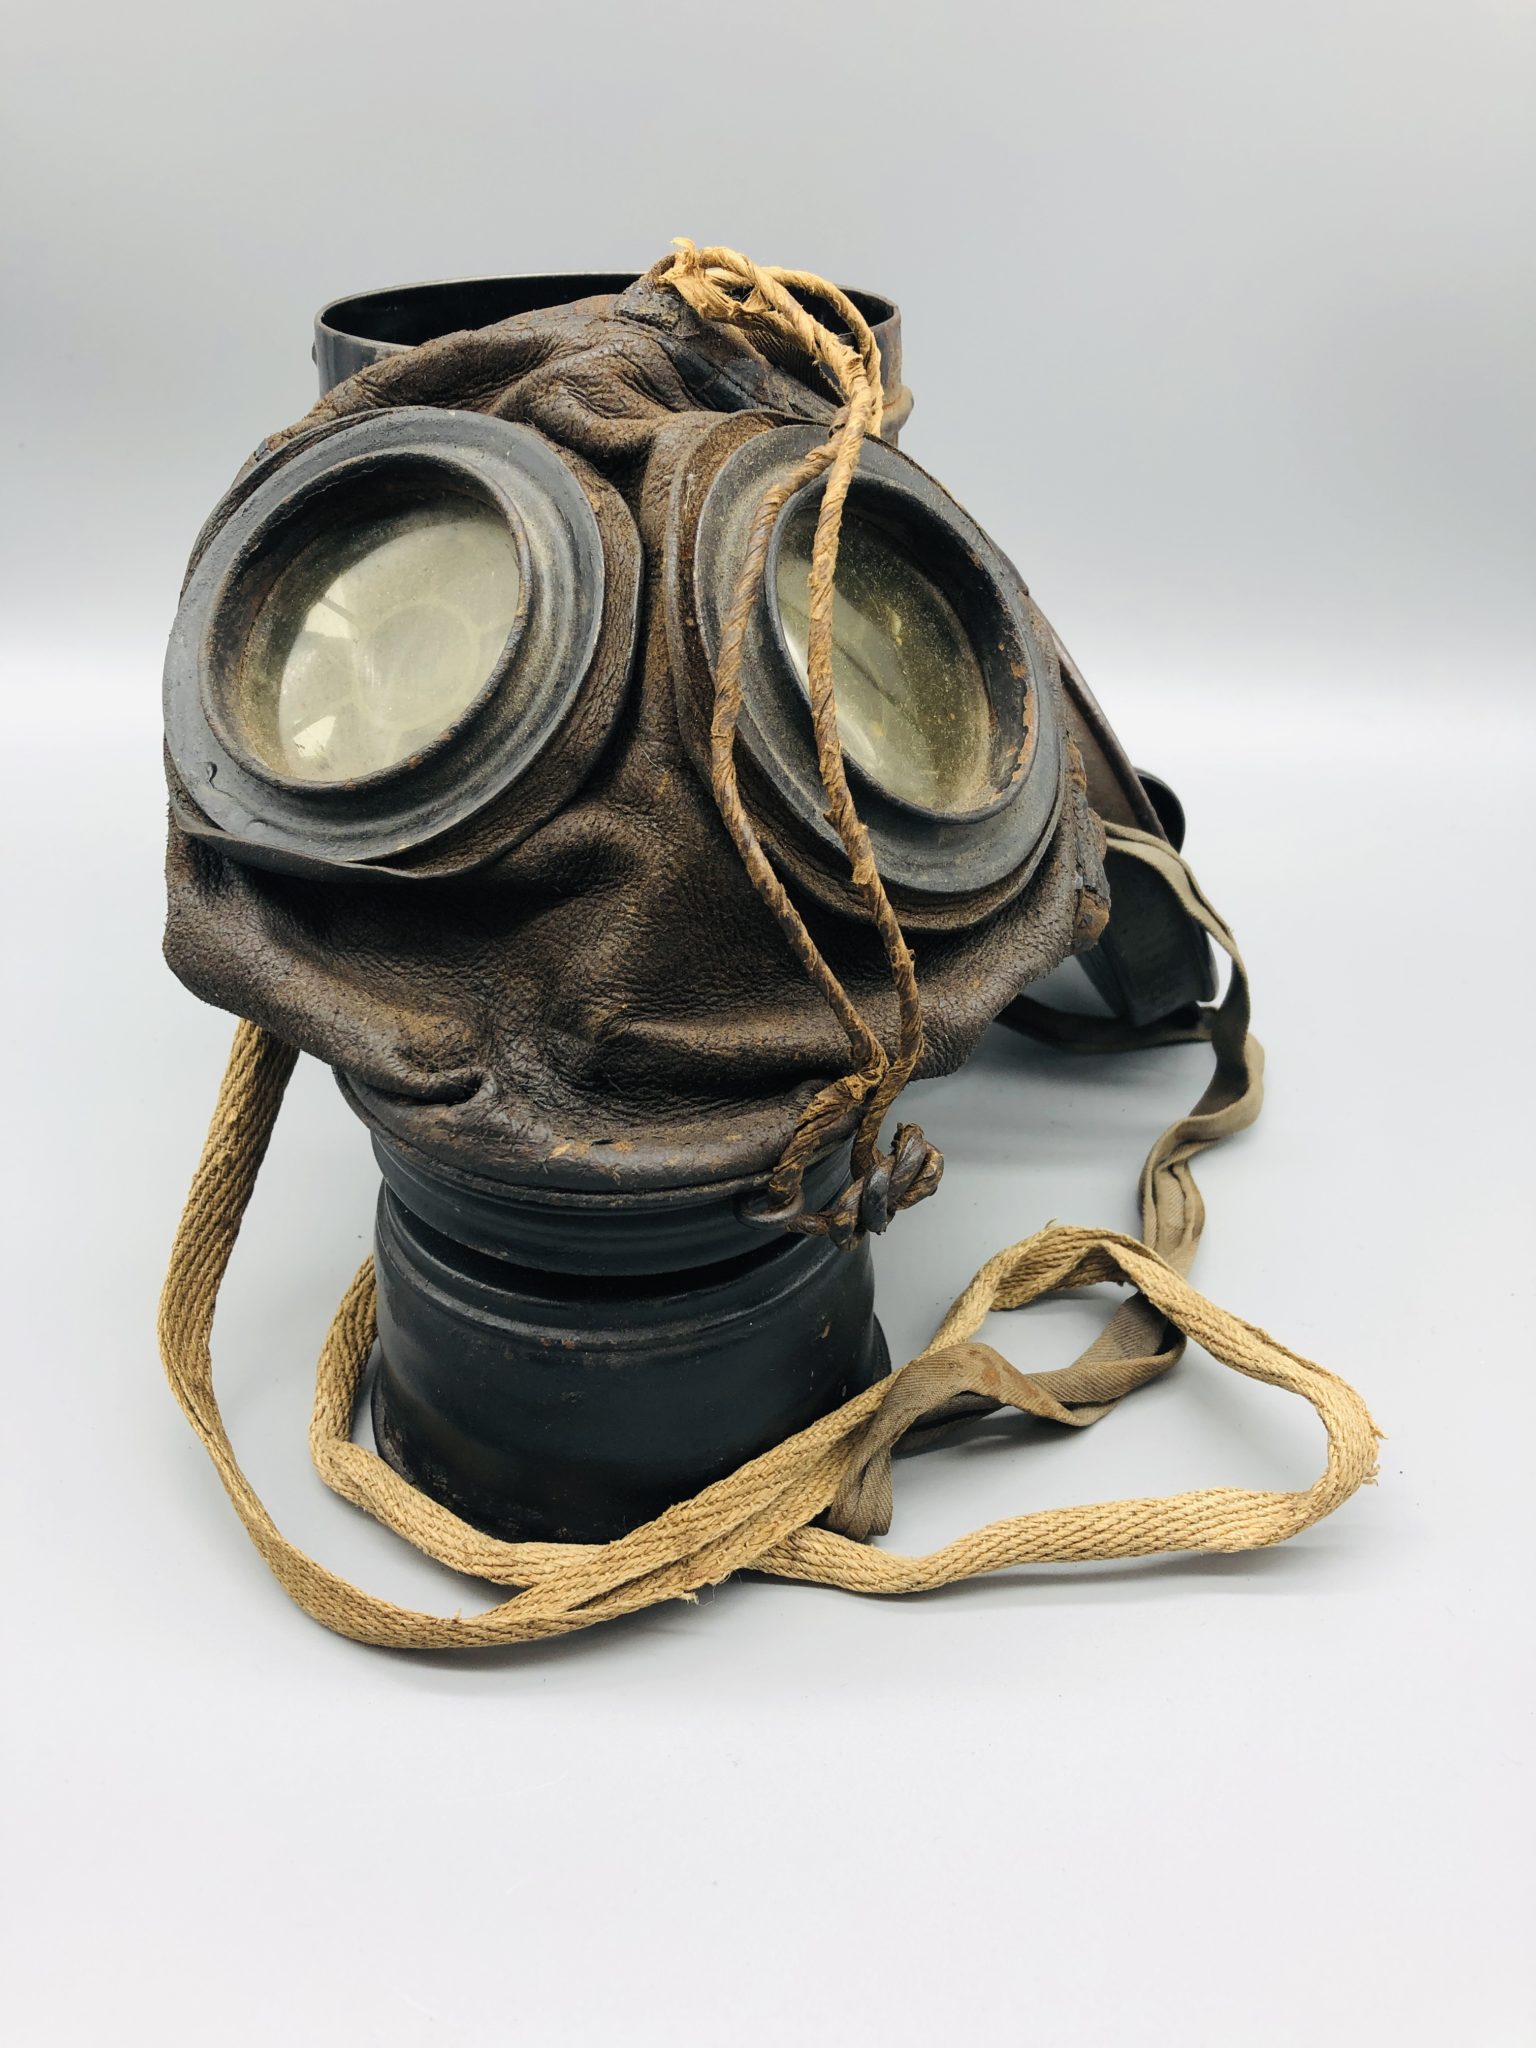 ww1 gas mask photos